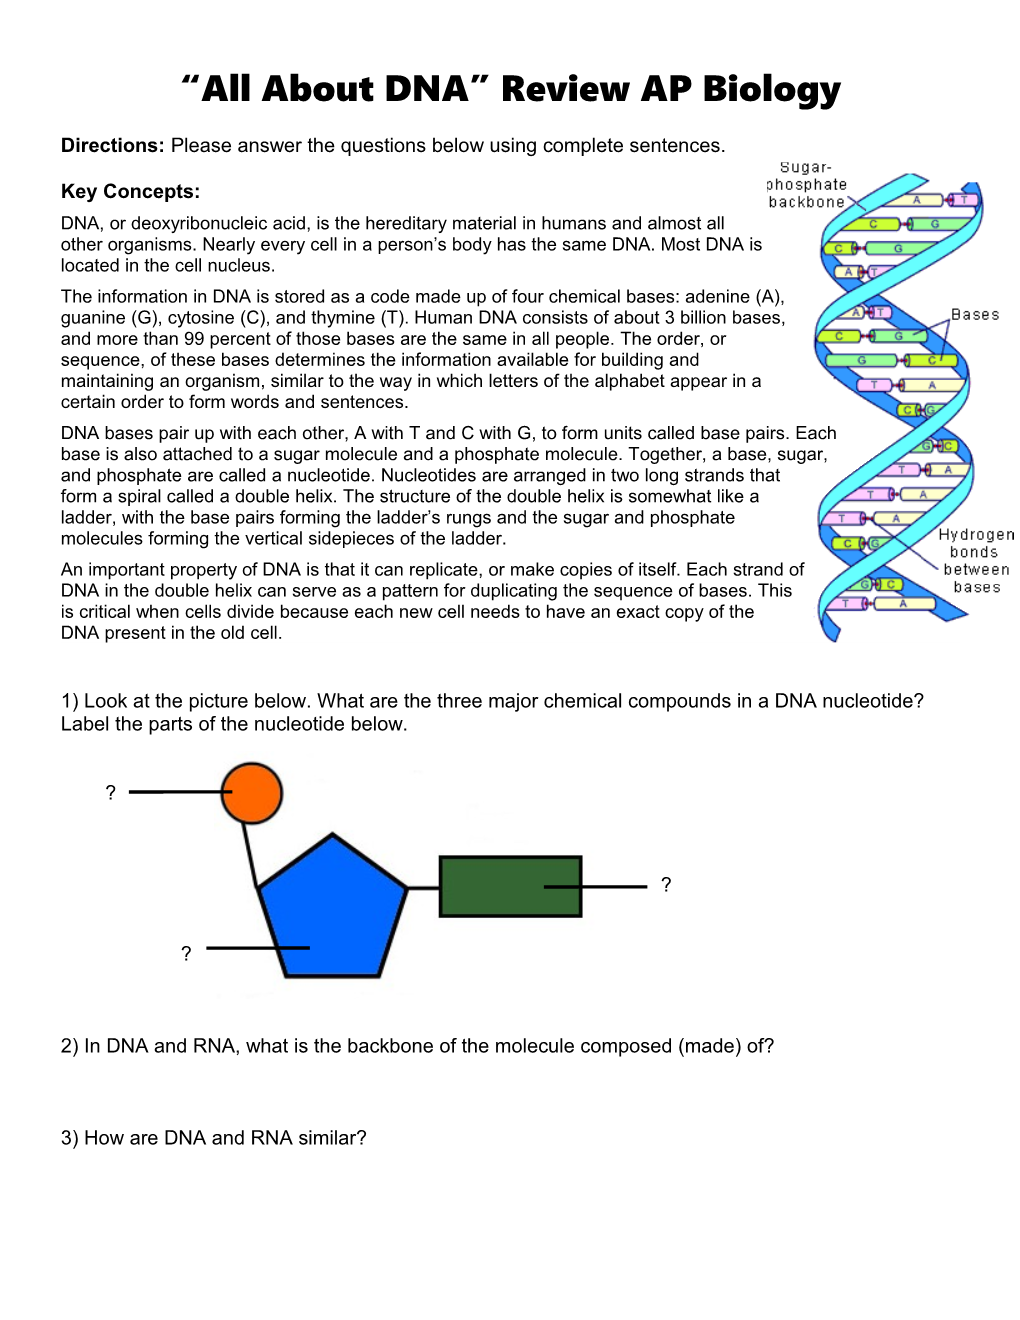 Homework # 11 - DNA-RNA PROBLEMS - Extra Credit 5 Points